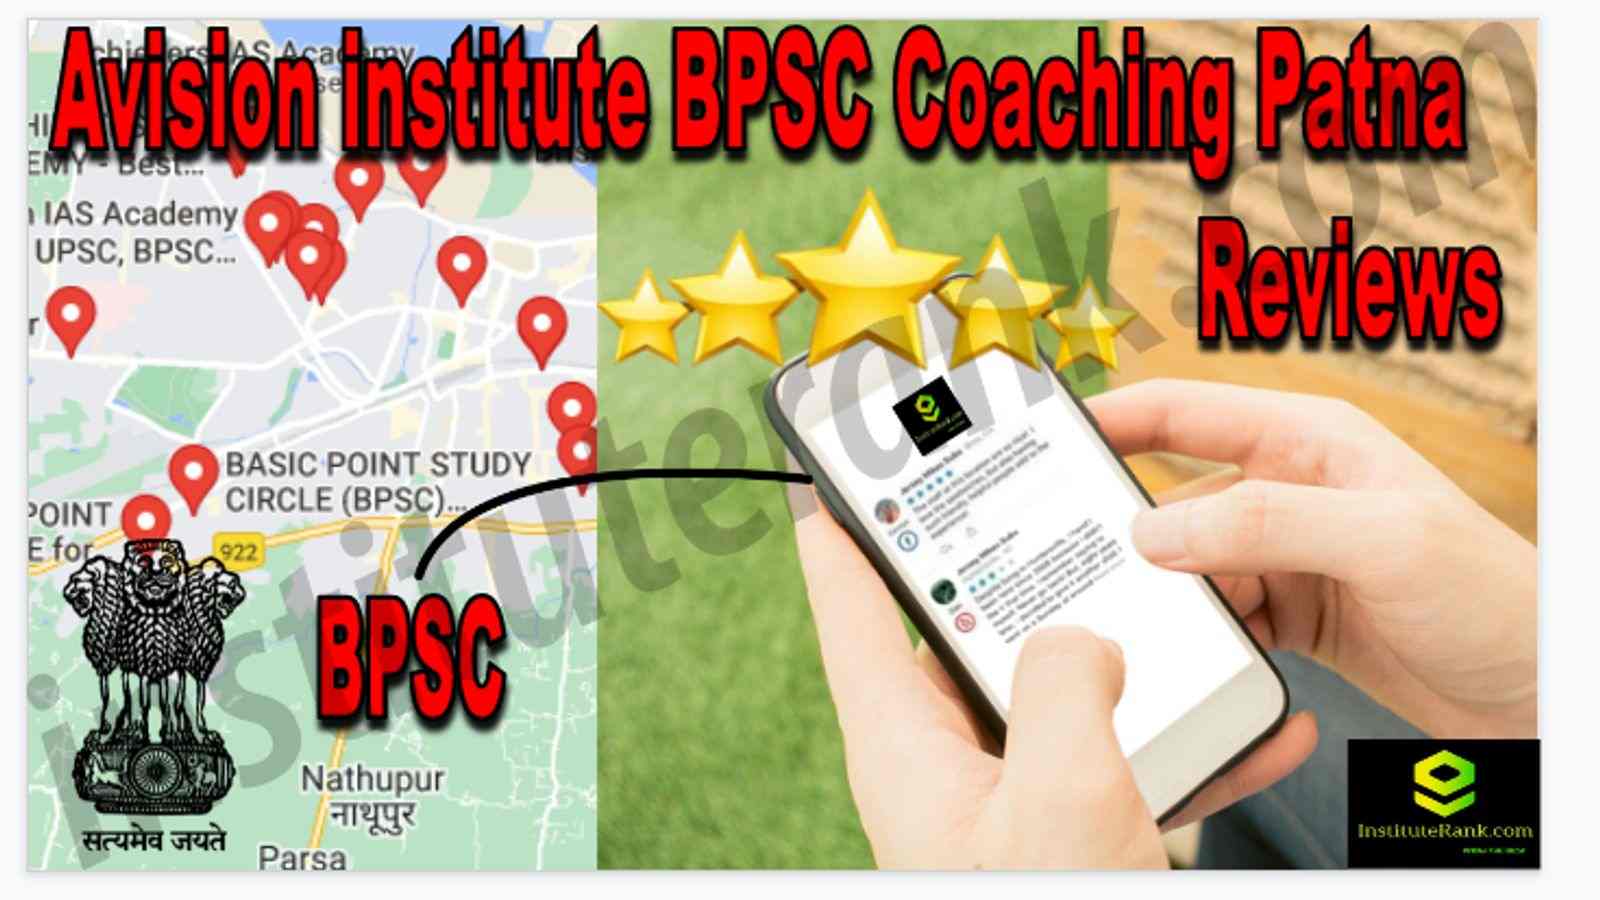 Avision institute BPSC Coaching Patna Reviews